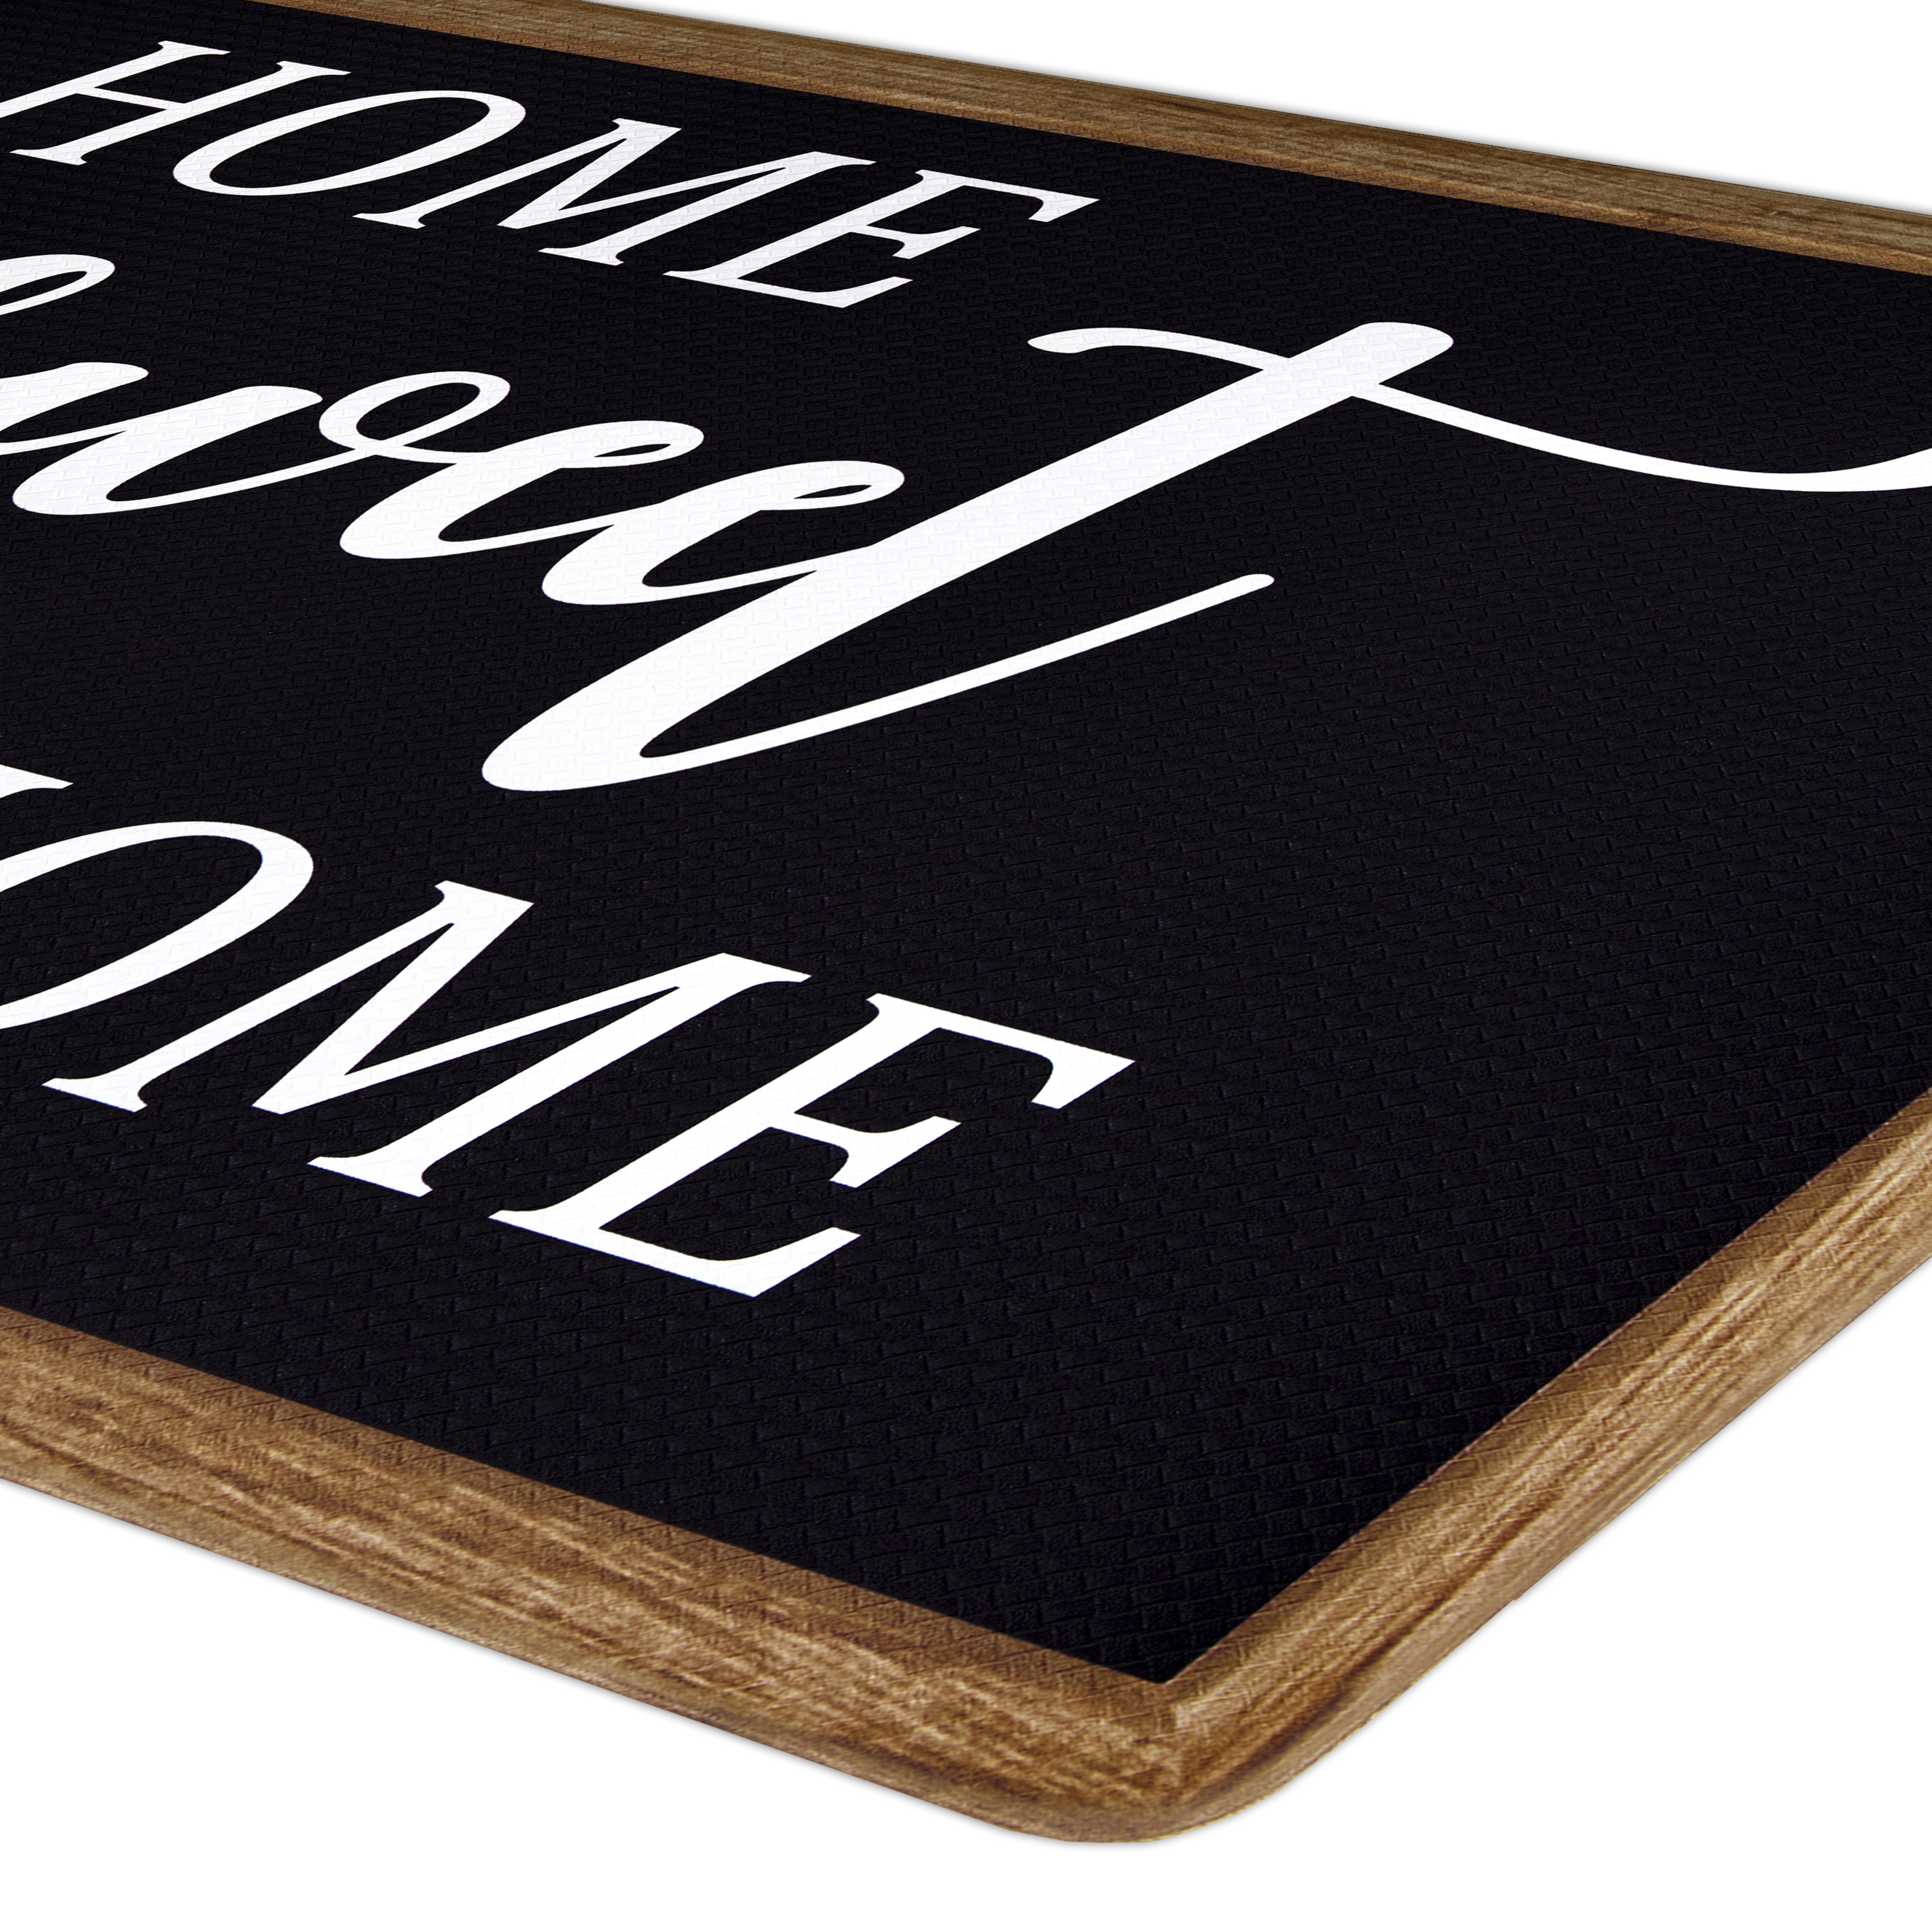 Woven Trends Home Sweet Home Anti Fatigue Non Slip Textured Comfort Standing Kitchen Mat